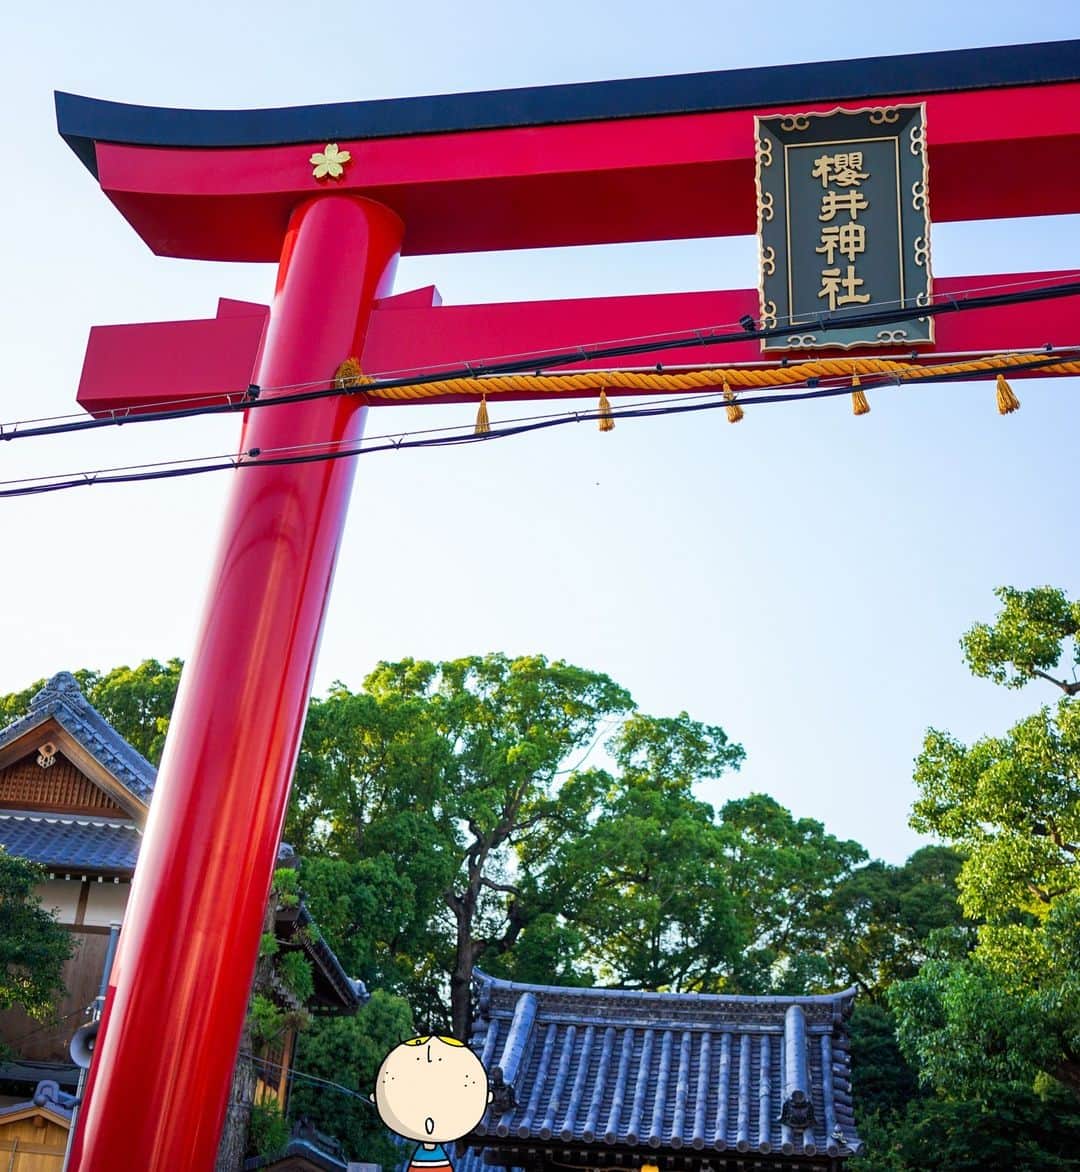 Osaka Bob（大阪観光局公式キャラクター）のインスタグラム：「Sakurai Jinja Shrine ⛩️ boasts a vivid contrast between its white-walled exterior and red wooden accents, evoking a simple yet elegant traditional architectural style👍   櫻井神社⛩️は外壁の白壁と朱色の木部との鮮やかなコントラストが美しく、シンプルですが、明快な木組みに時代を感じることができるで👍  —————————————————————  #maido #withOsakaBob #OSAKA #osakatrip #japan #nihon #OsakaJapan #大坂 #오사카 #大阪 #Оsака #Осака #โอซาก้า #大阪観光 #sightseeing #Osakatravel #Osakajepang #traveljepang #osakatravel #osakatrip#櫻井神社」